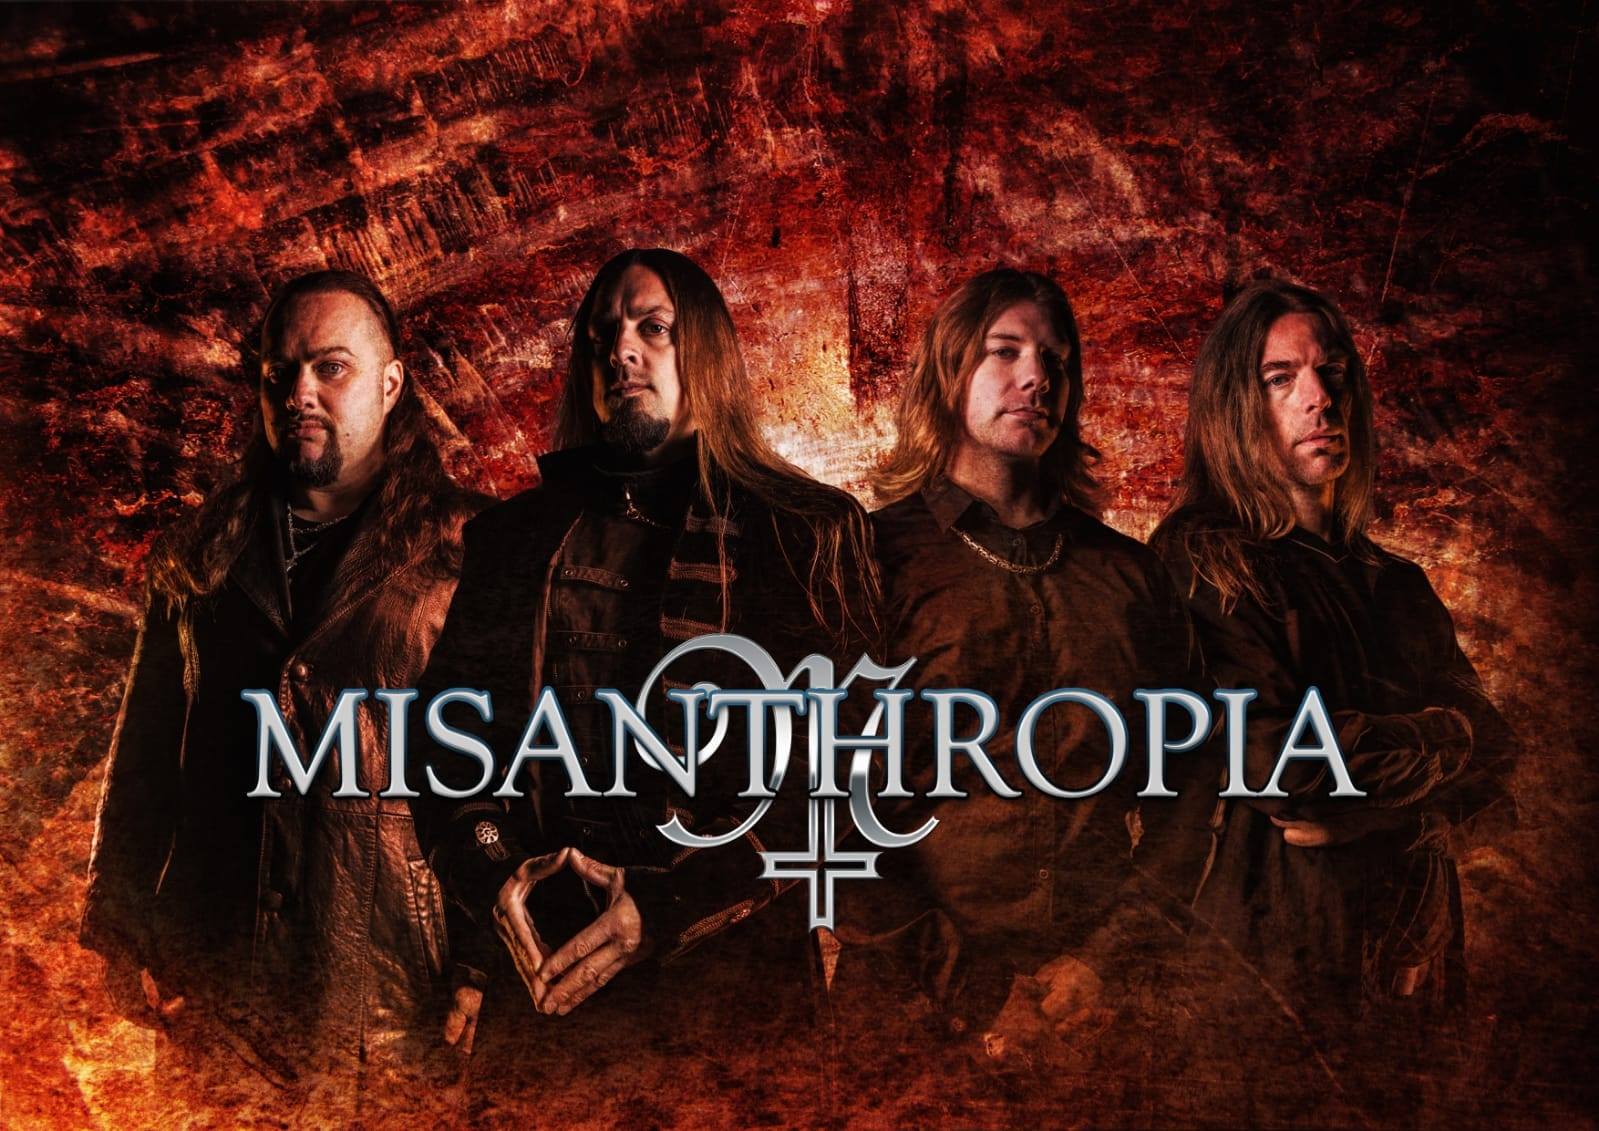 Black metal night with Misanthropia and Bakasura